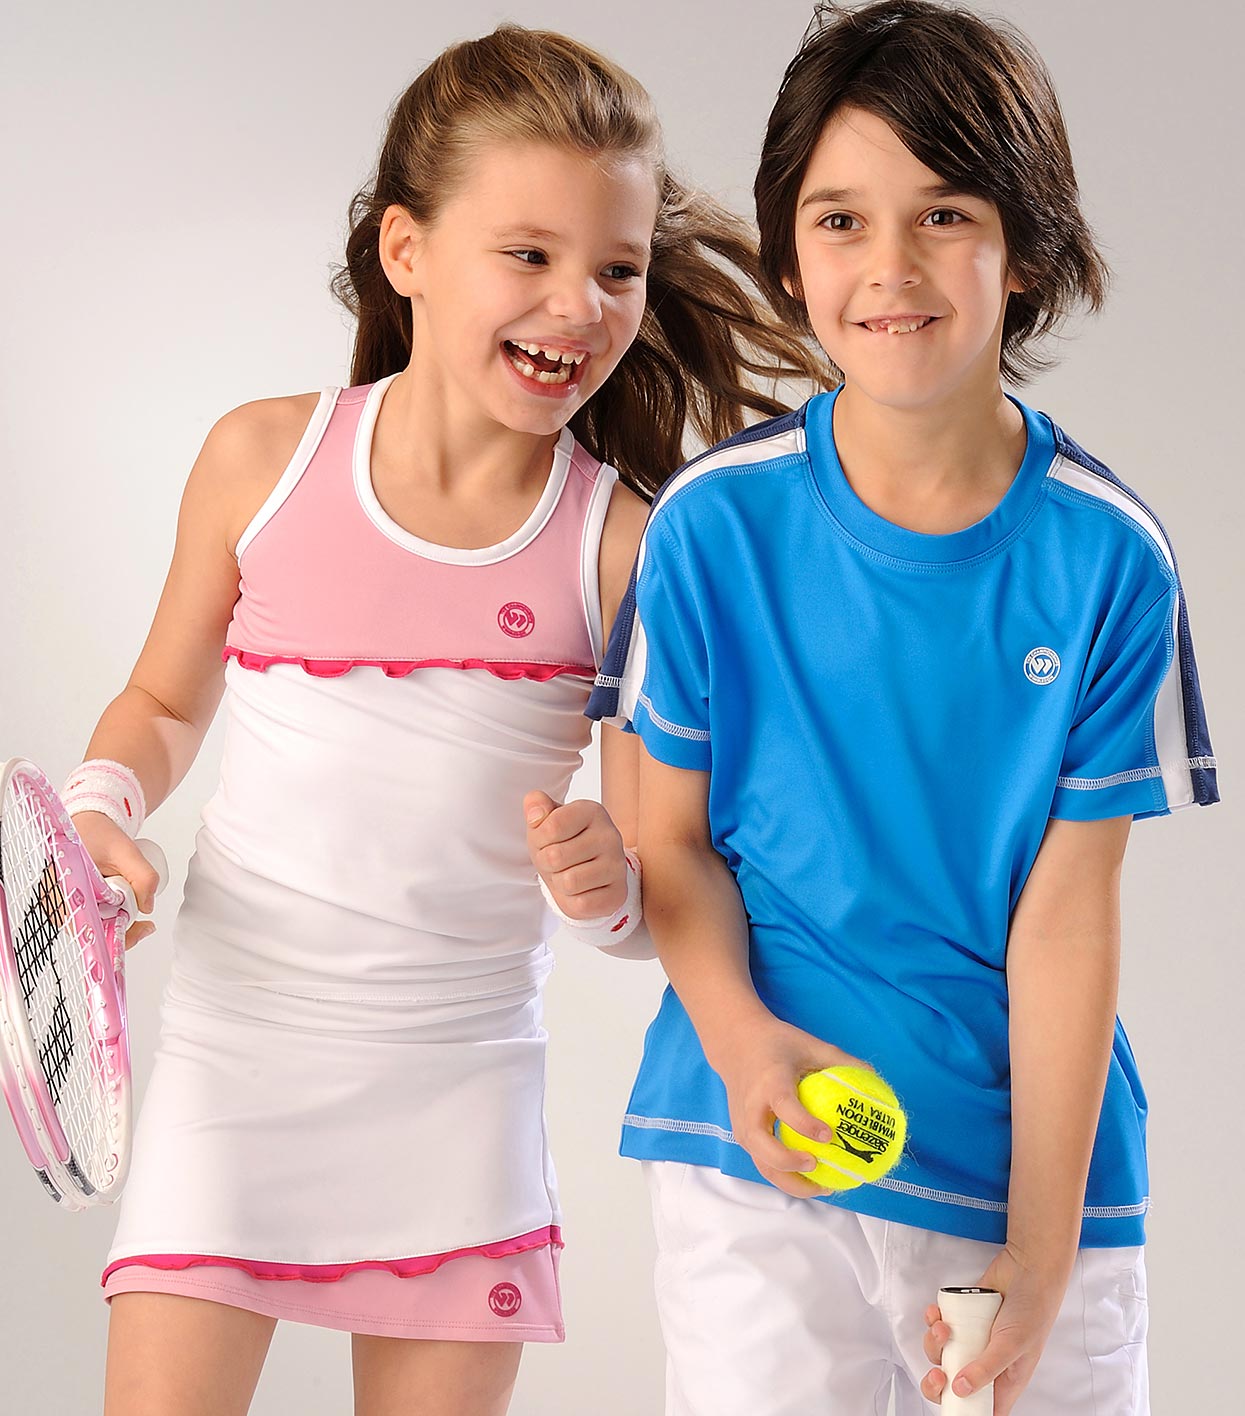 AELTC (Wimbledon): Fashion photography featuring children by Basement Photographic